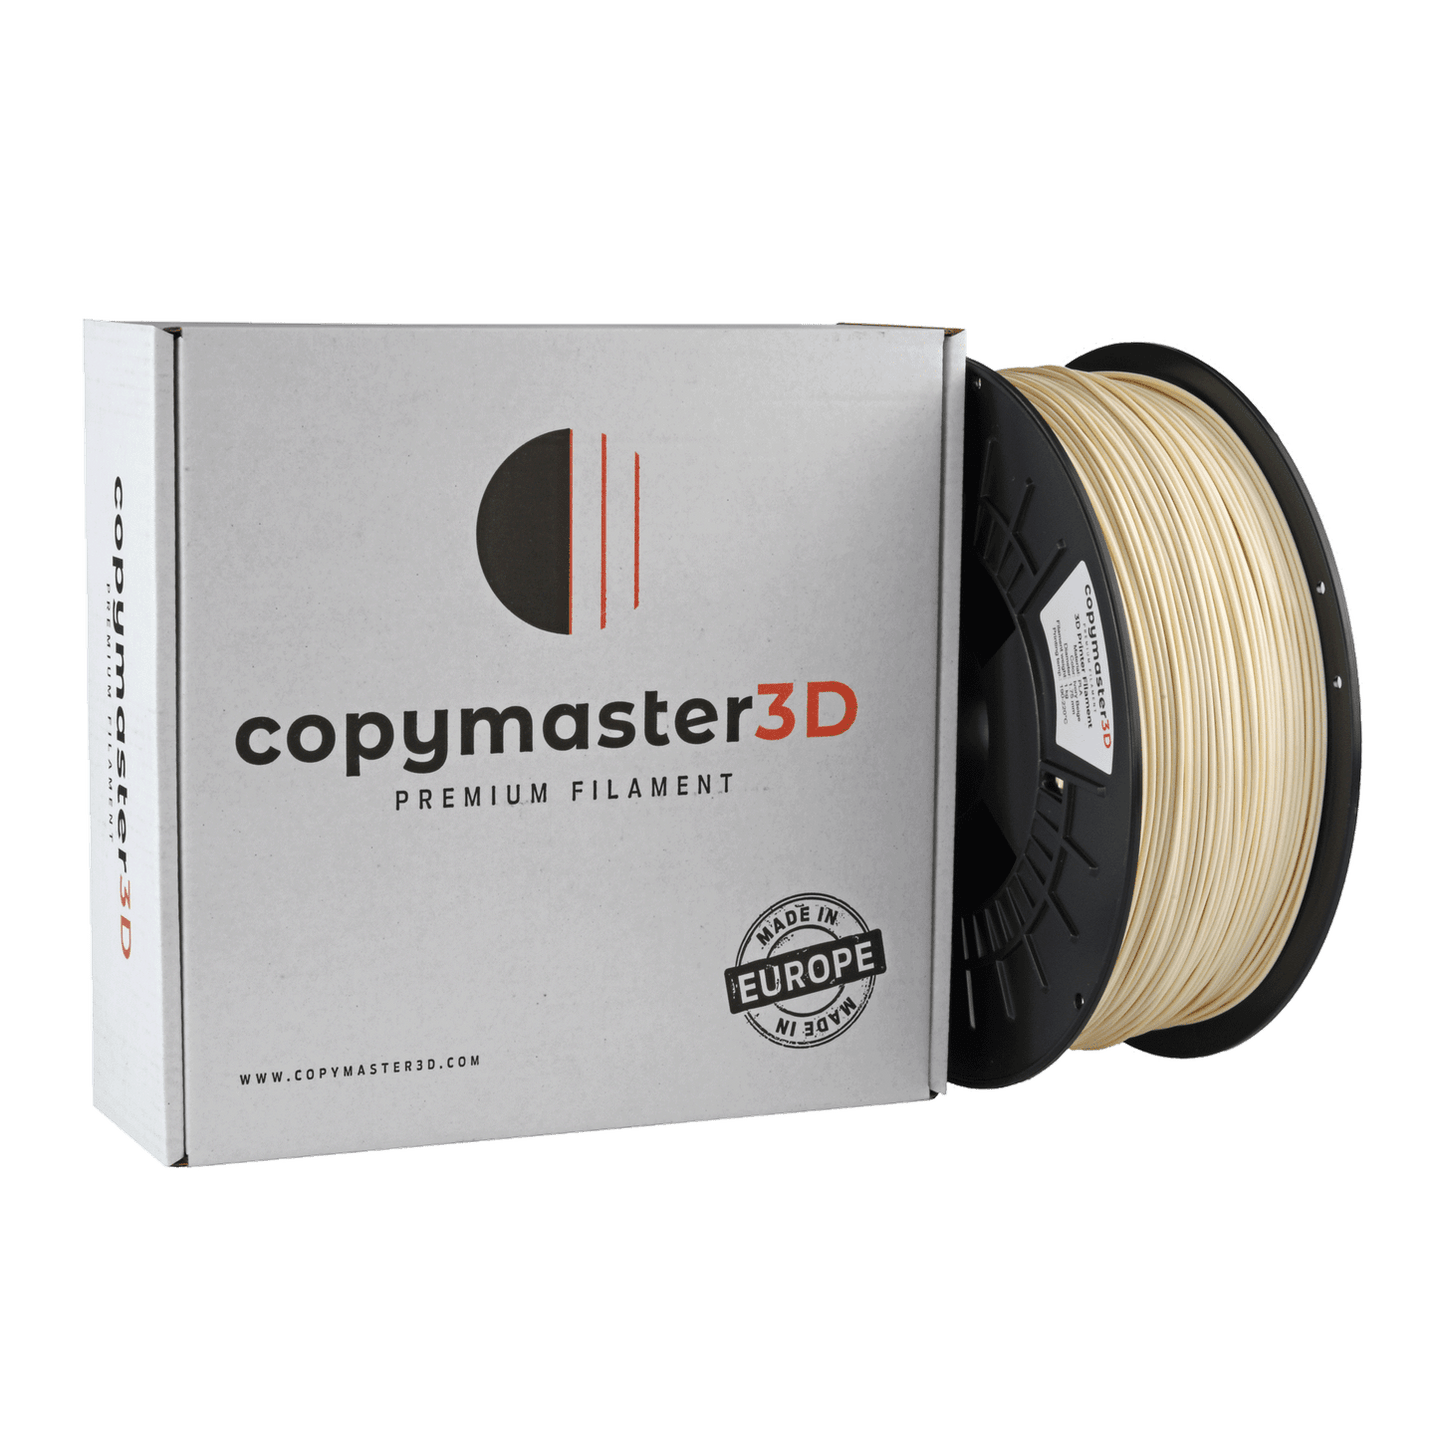 Copymaster3D Premium PLA Filament 1.75mm 1KG Ivory Beige